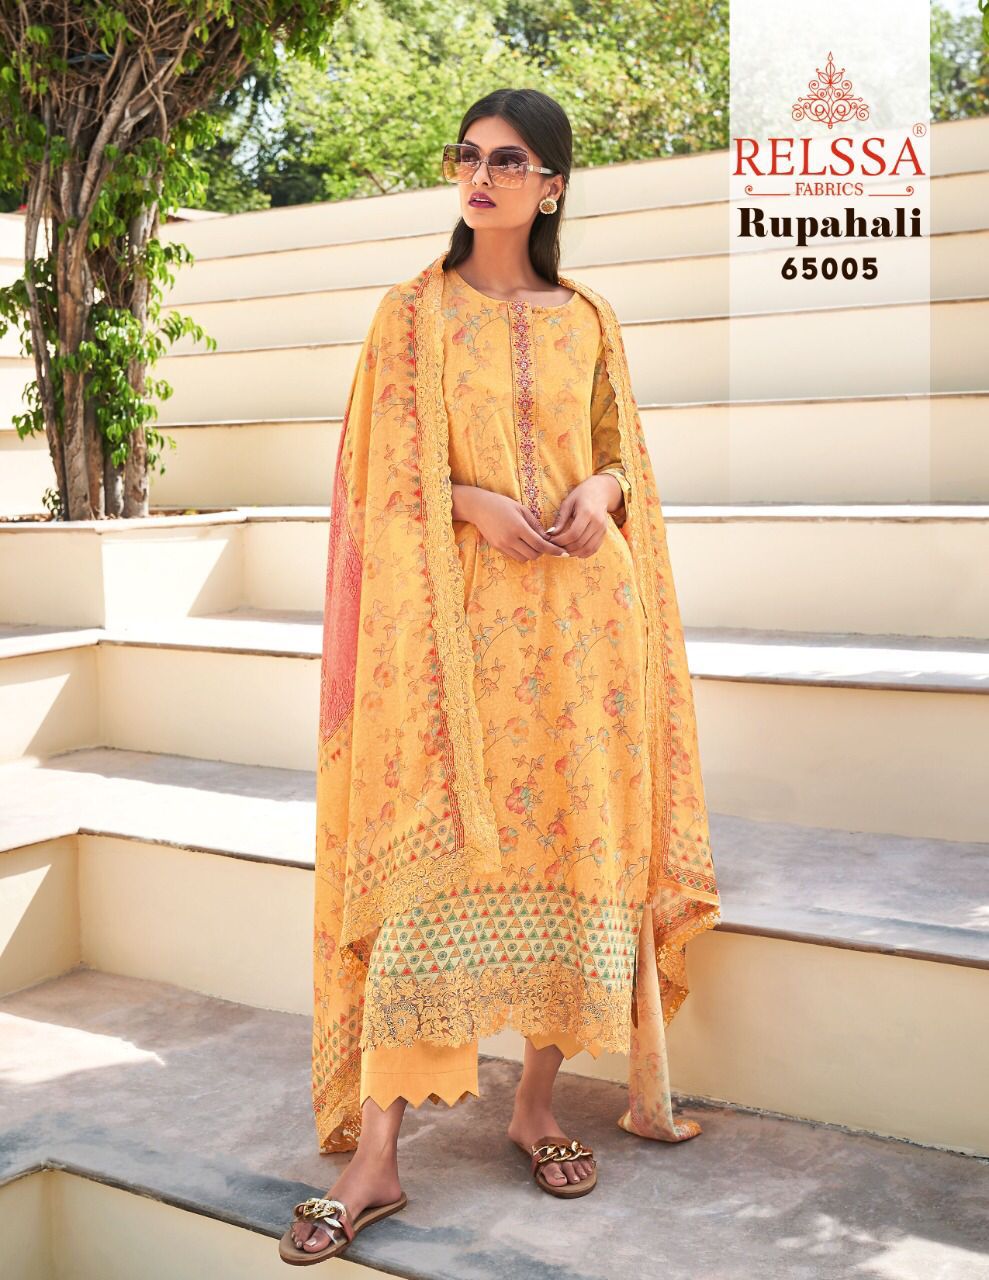 Relssa Fabrics Rupahali 65005